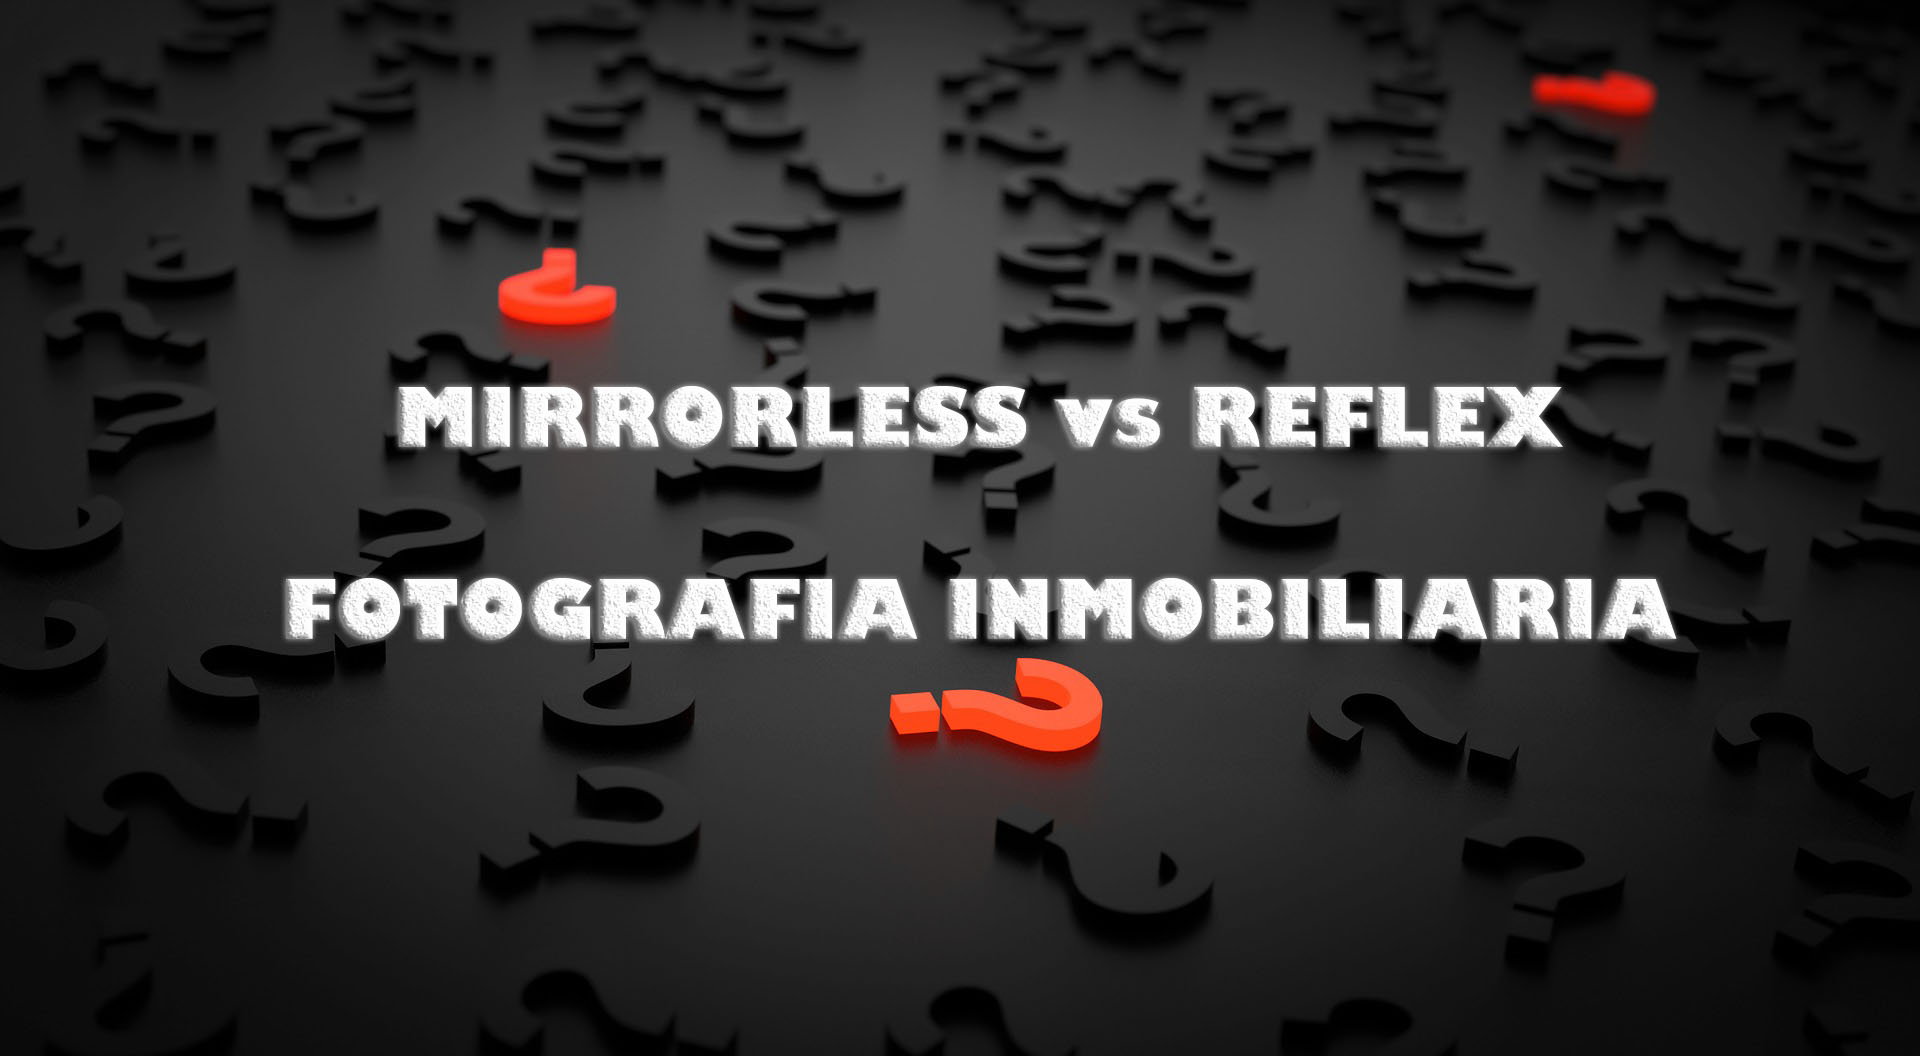 Mirrorless vs reflex